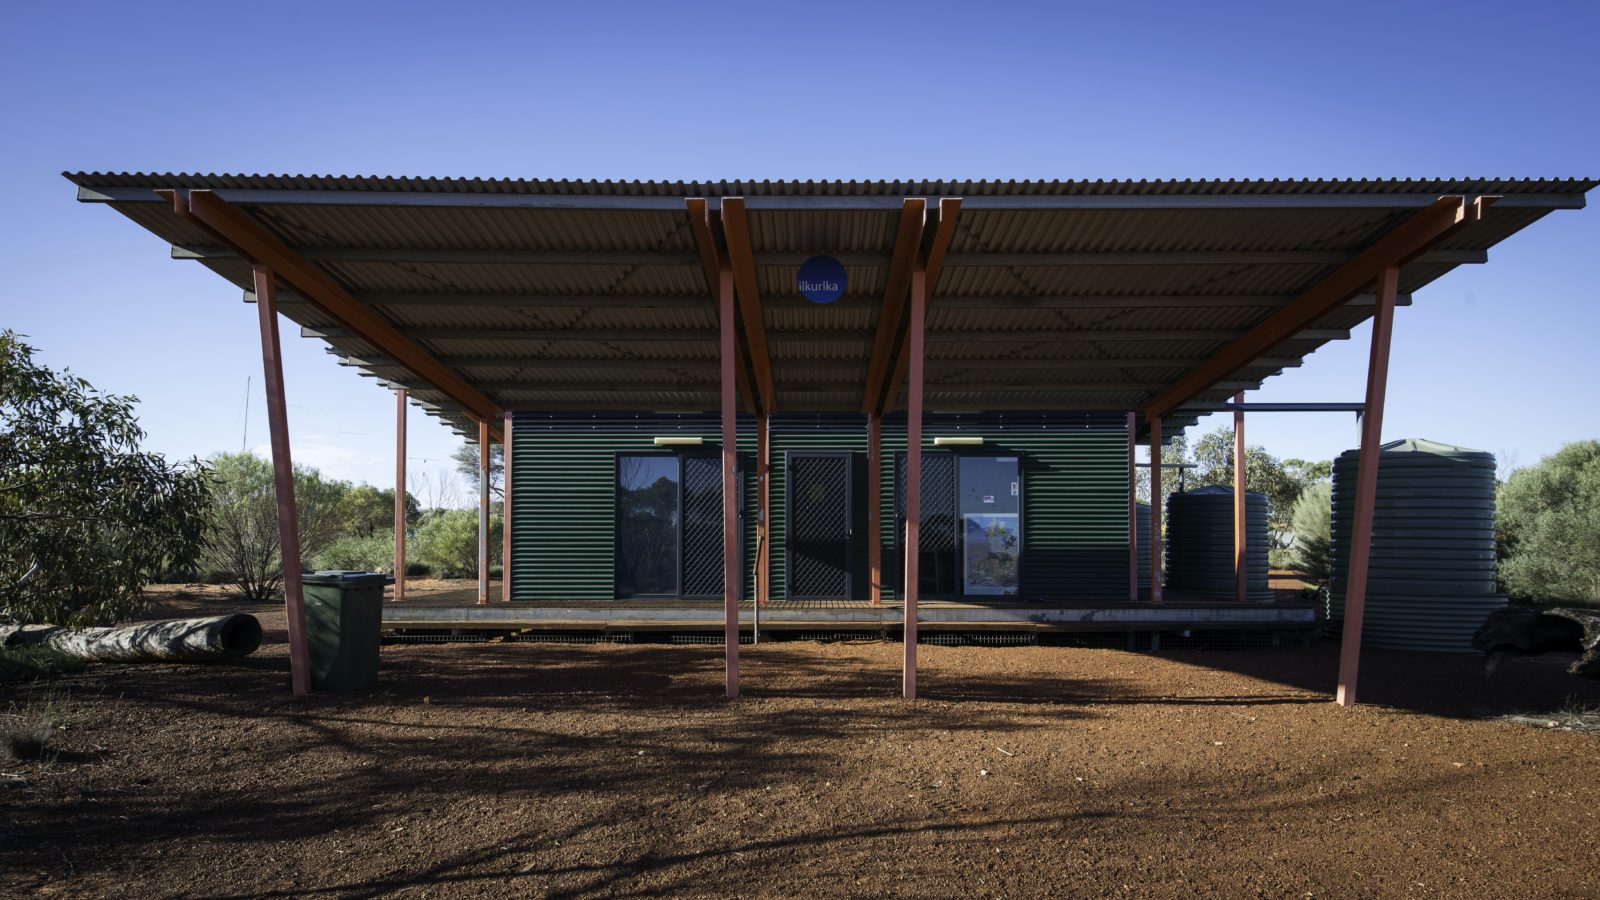 Ilkurlka Roadhouse, Ilkurlka, Western Australia